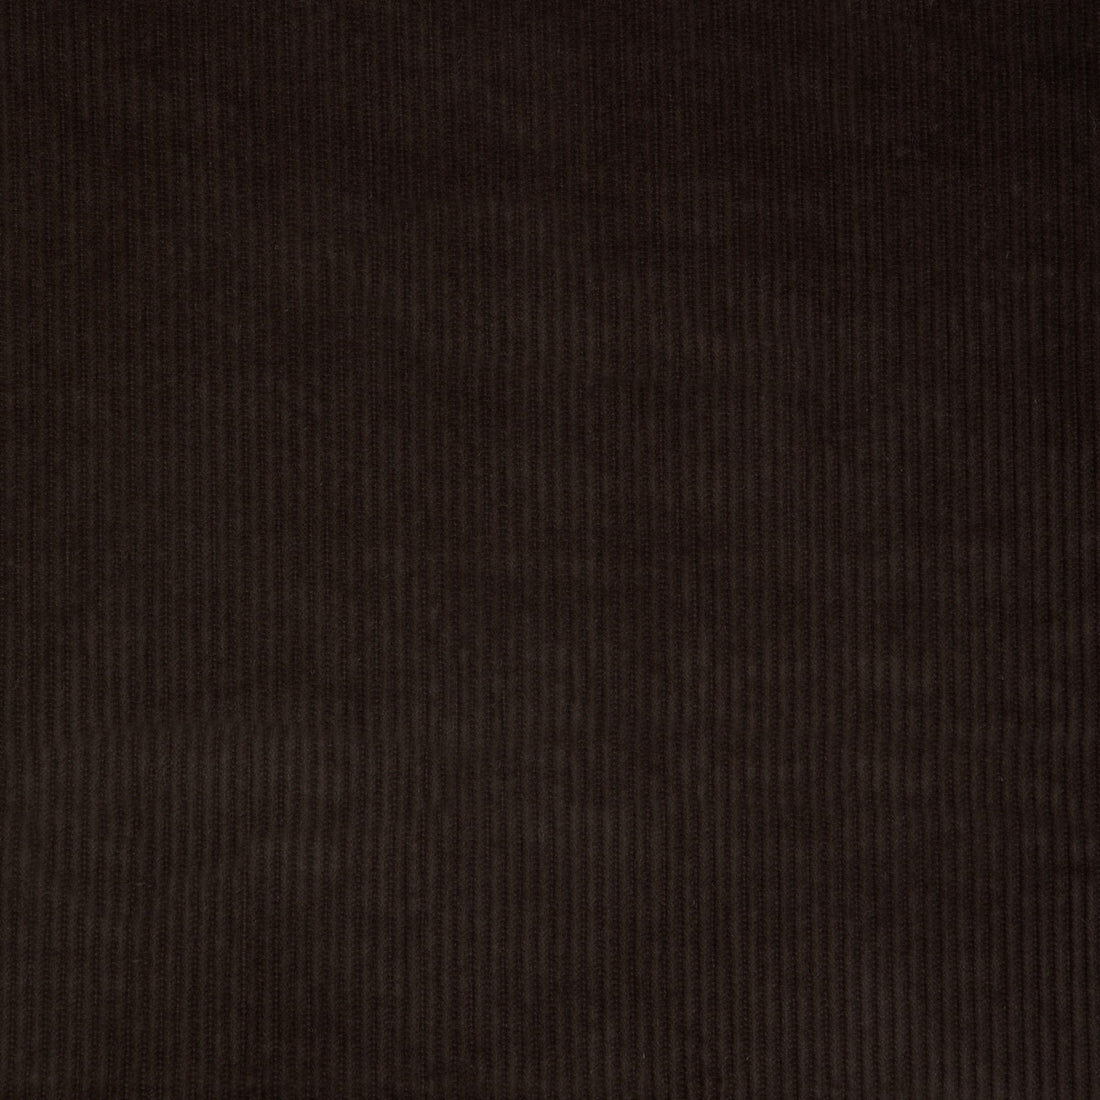 Kravet Smart fabric in 37006-66 color - pattern 37006.66.0 - by Kravet Smart